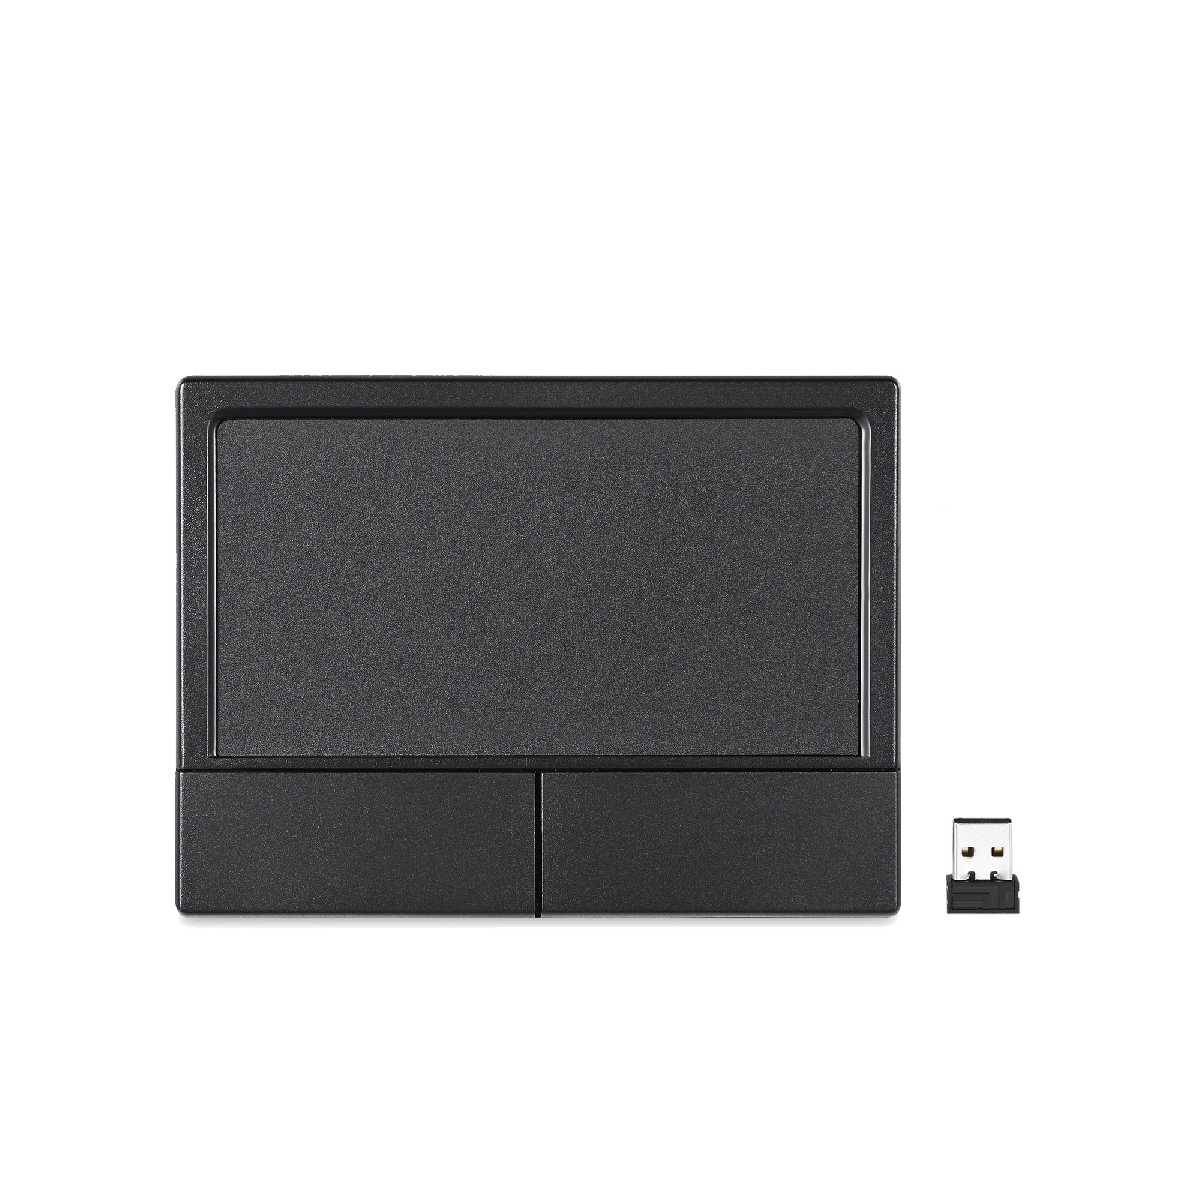 PERIPAD-704 großes kabelloses Touchpad schwarz